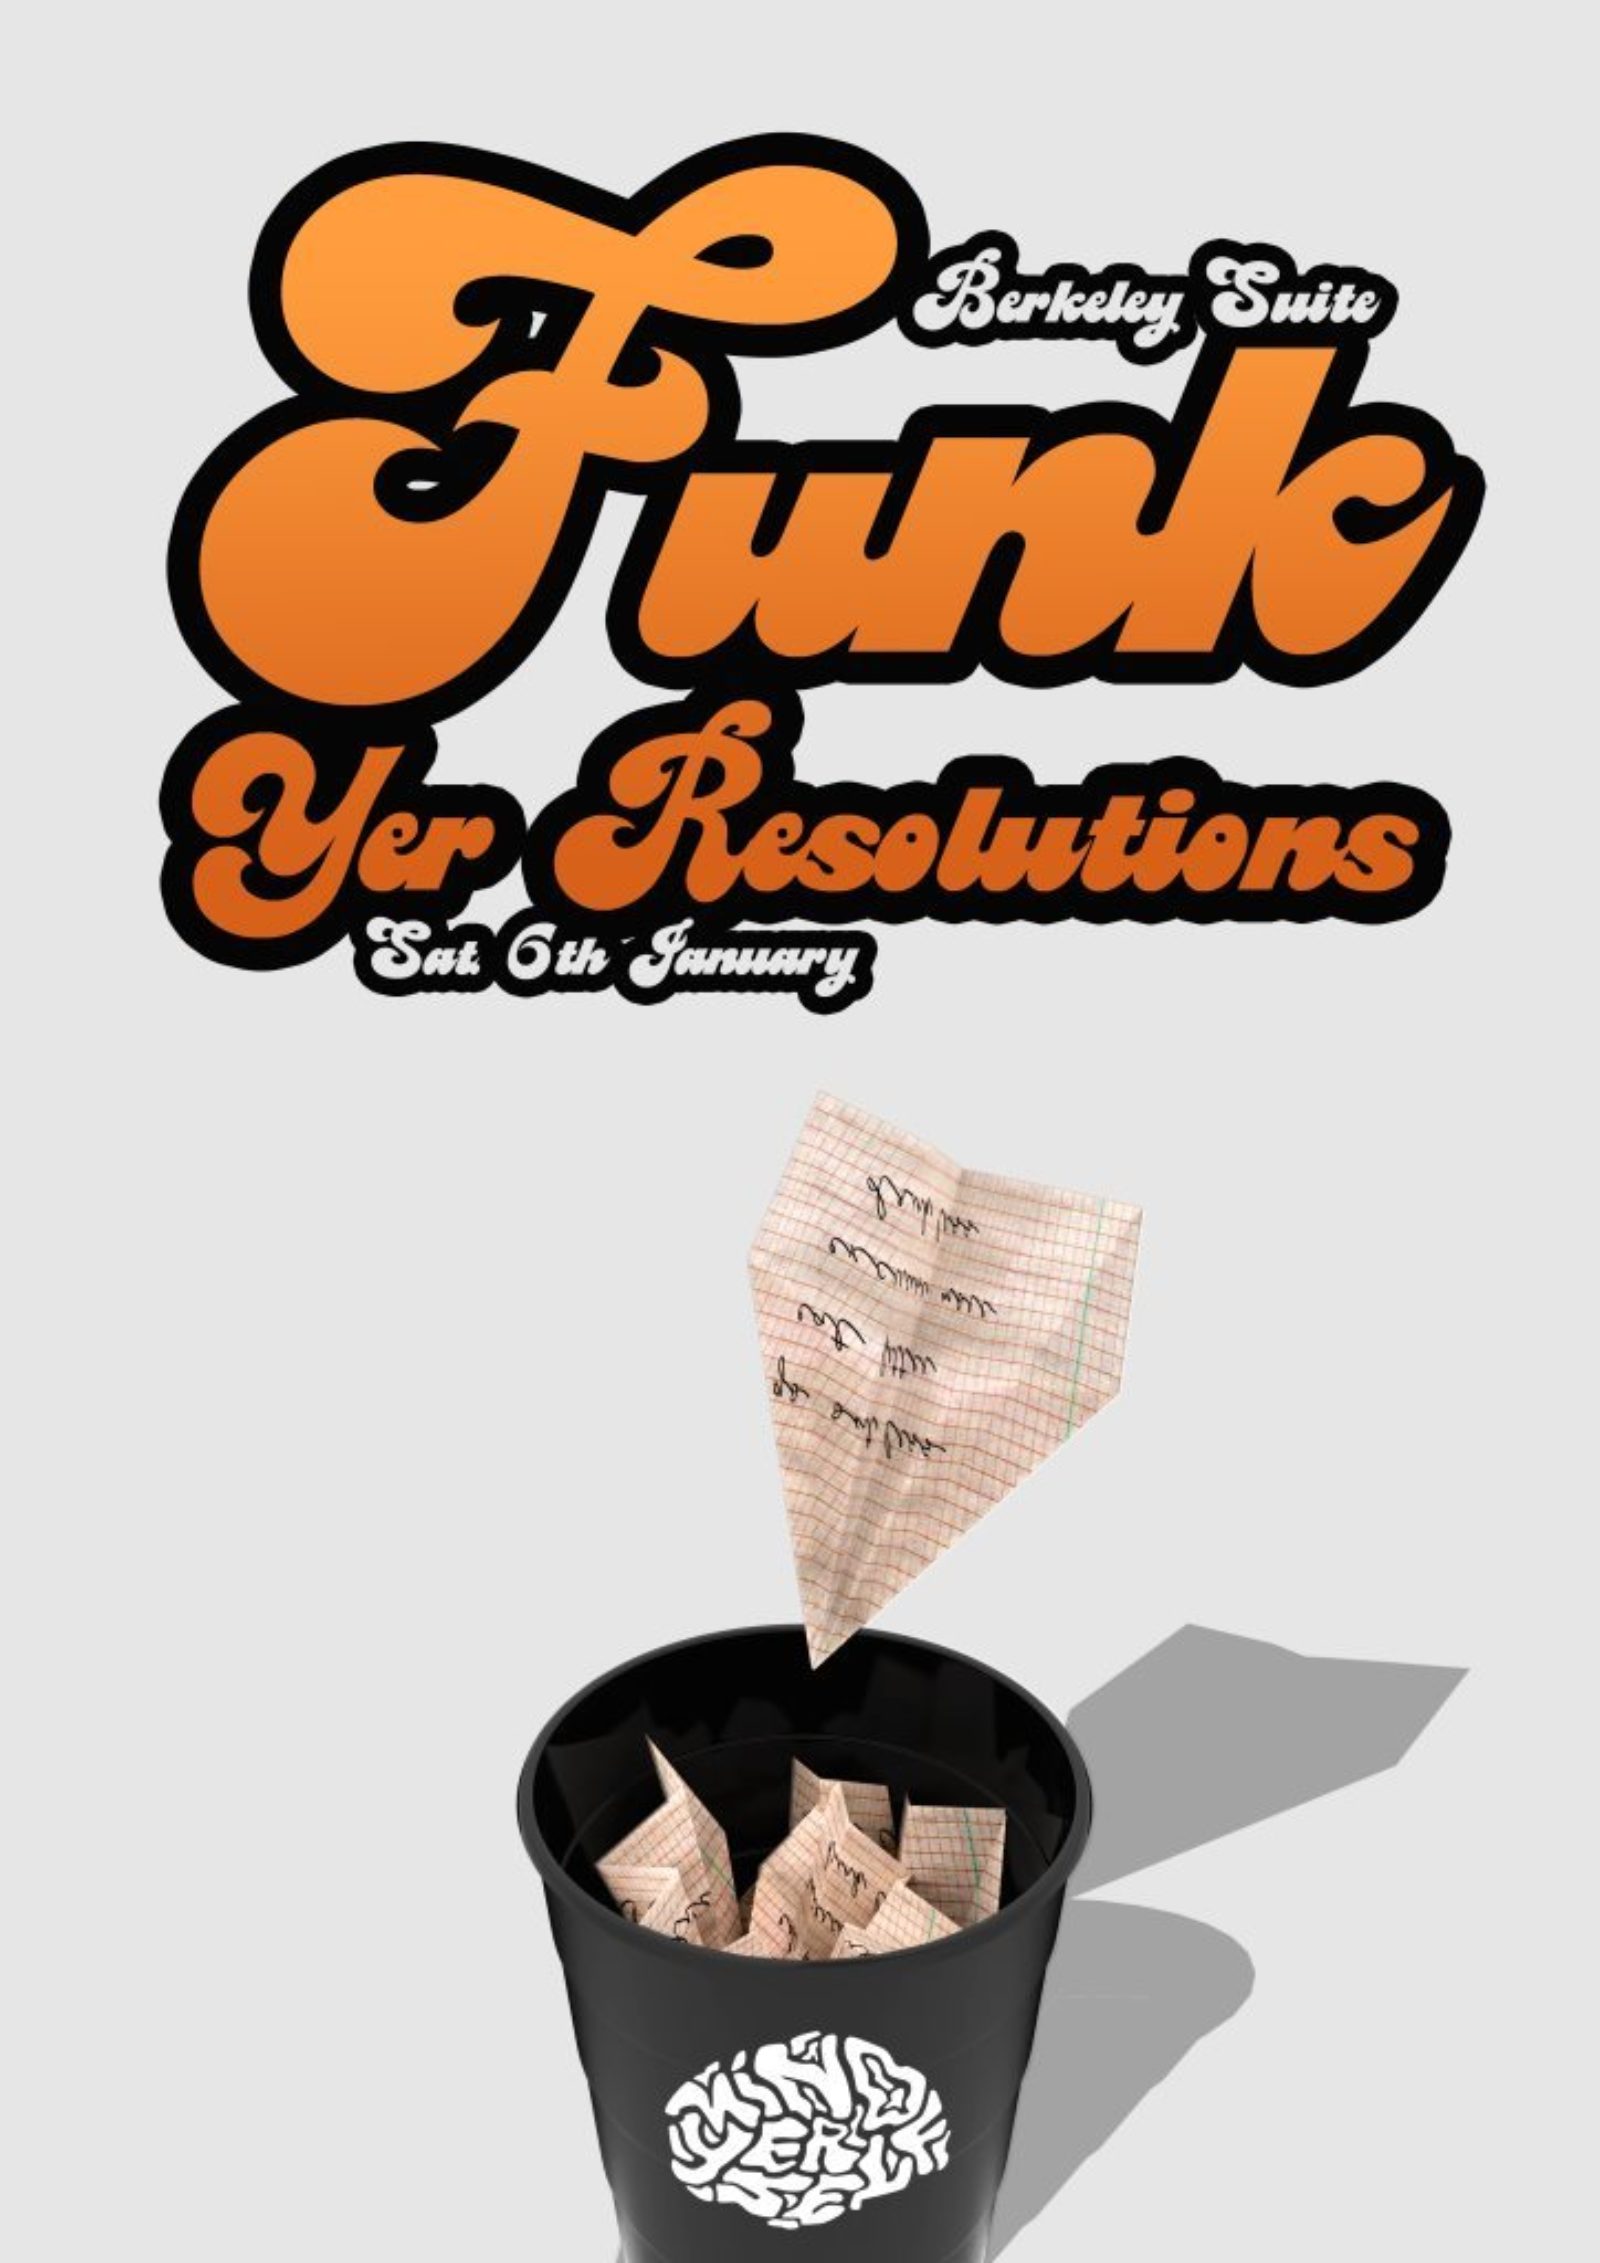 Funk Yer Resolutions